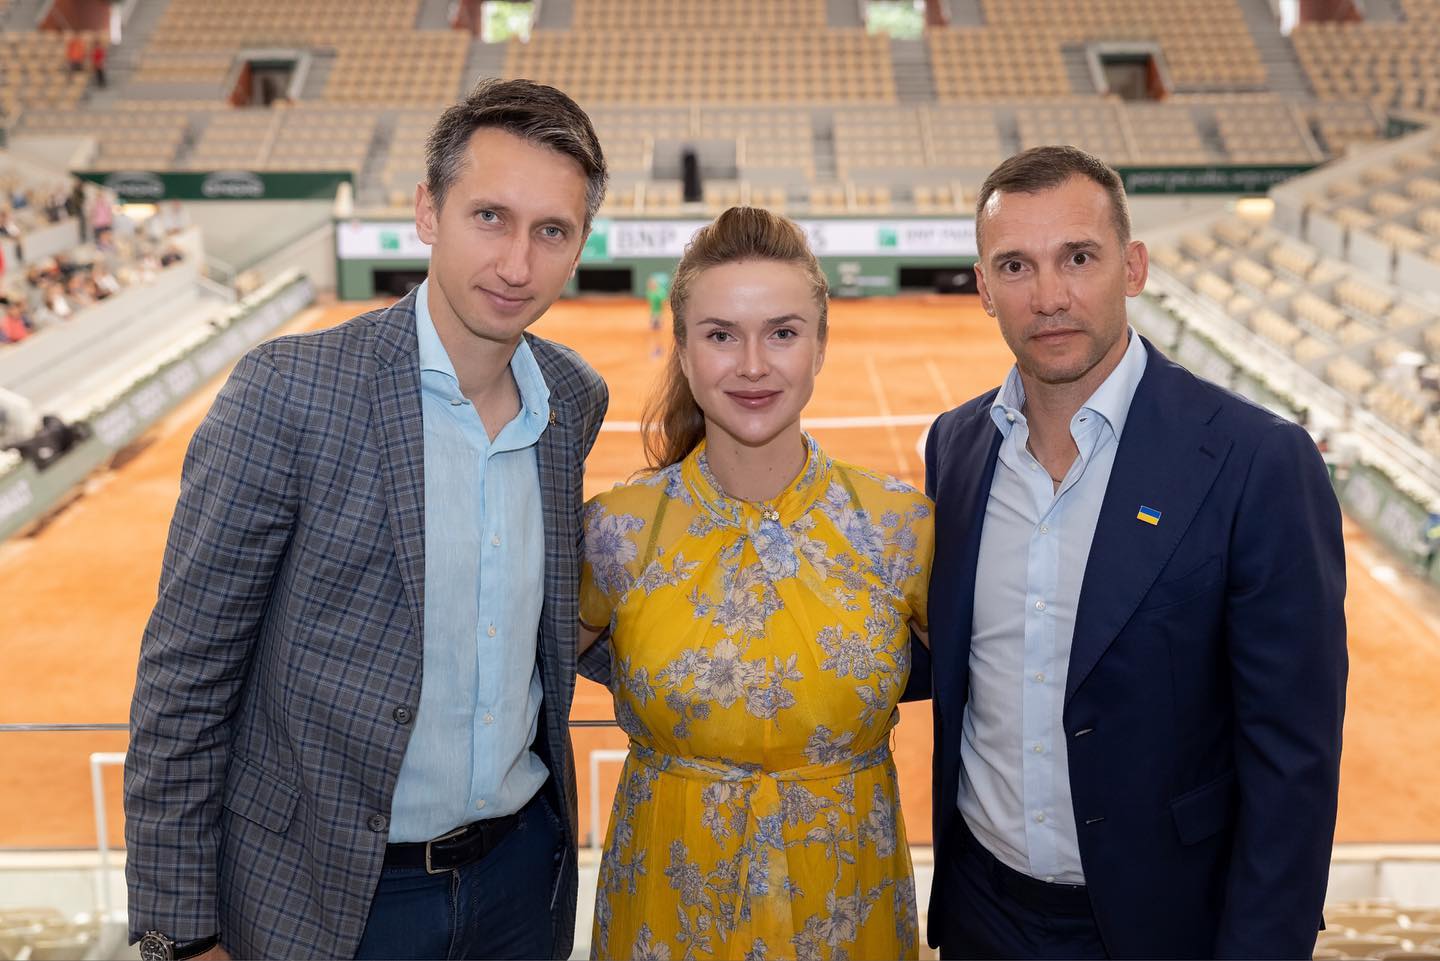 Famous Ukrainian tennis player Elina Svitolina became a UNITED24 ambassador